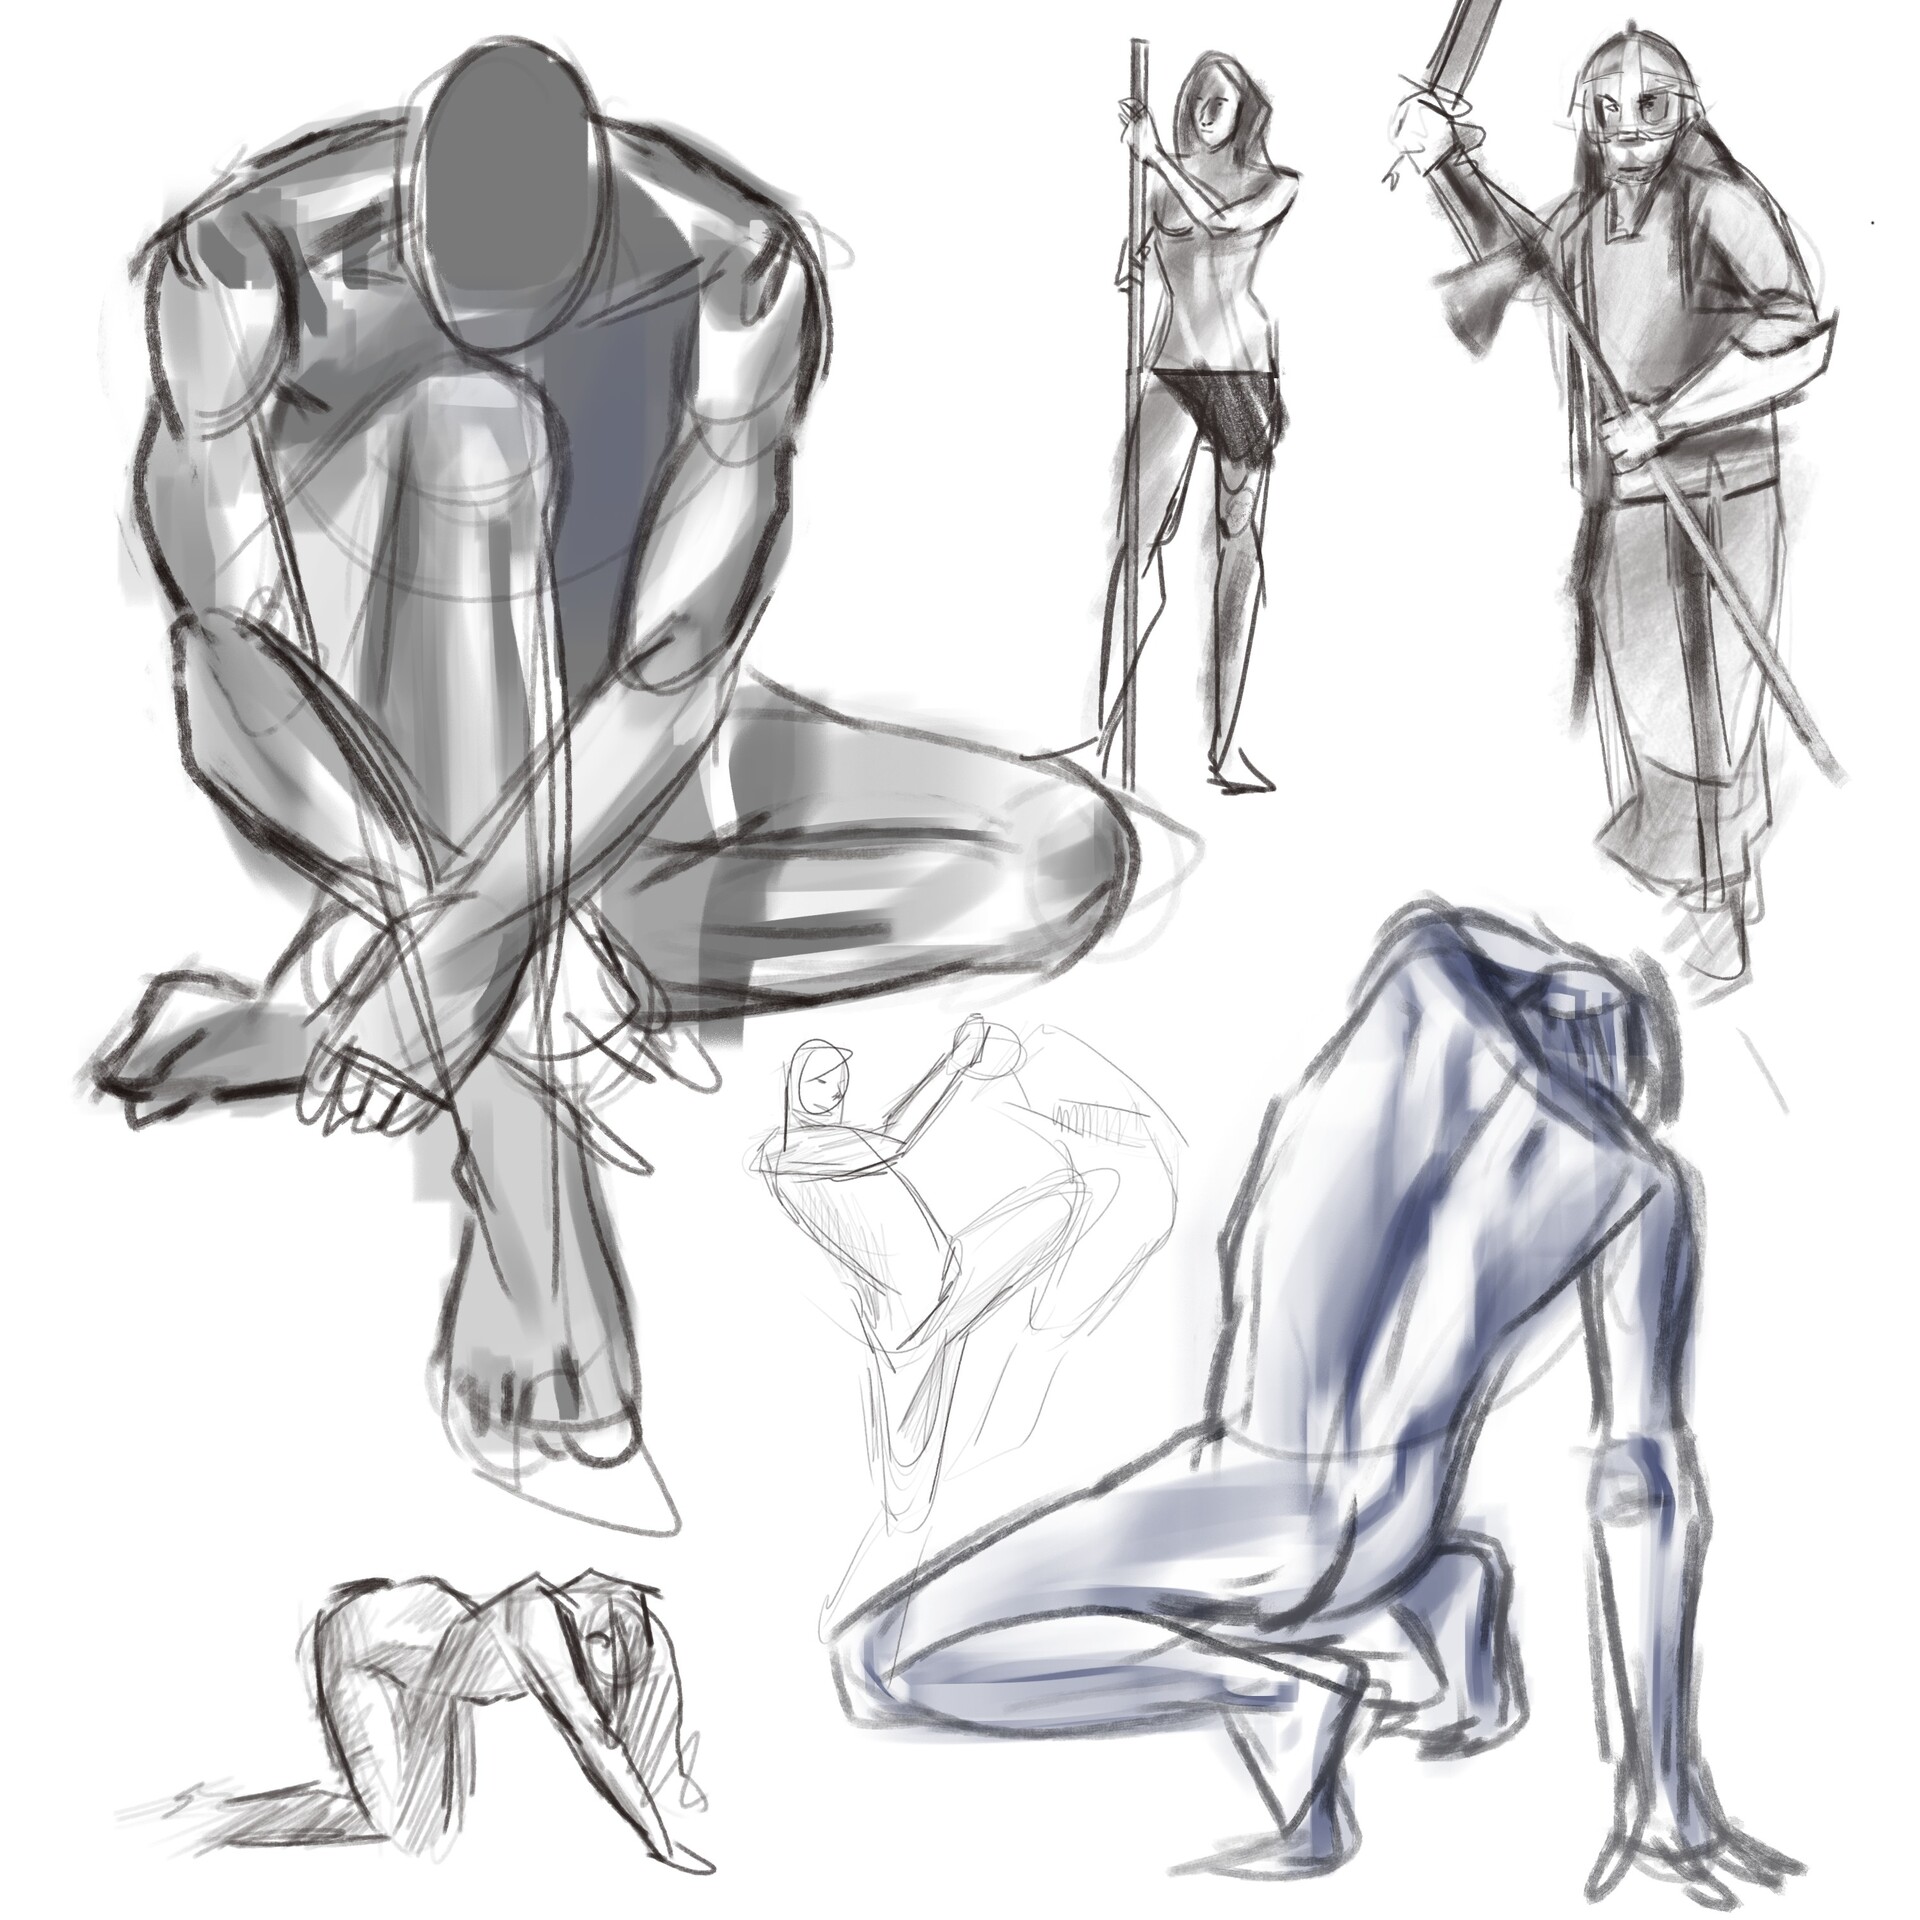 ArtStation - Gesture drawing/ anatomy stuff